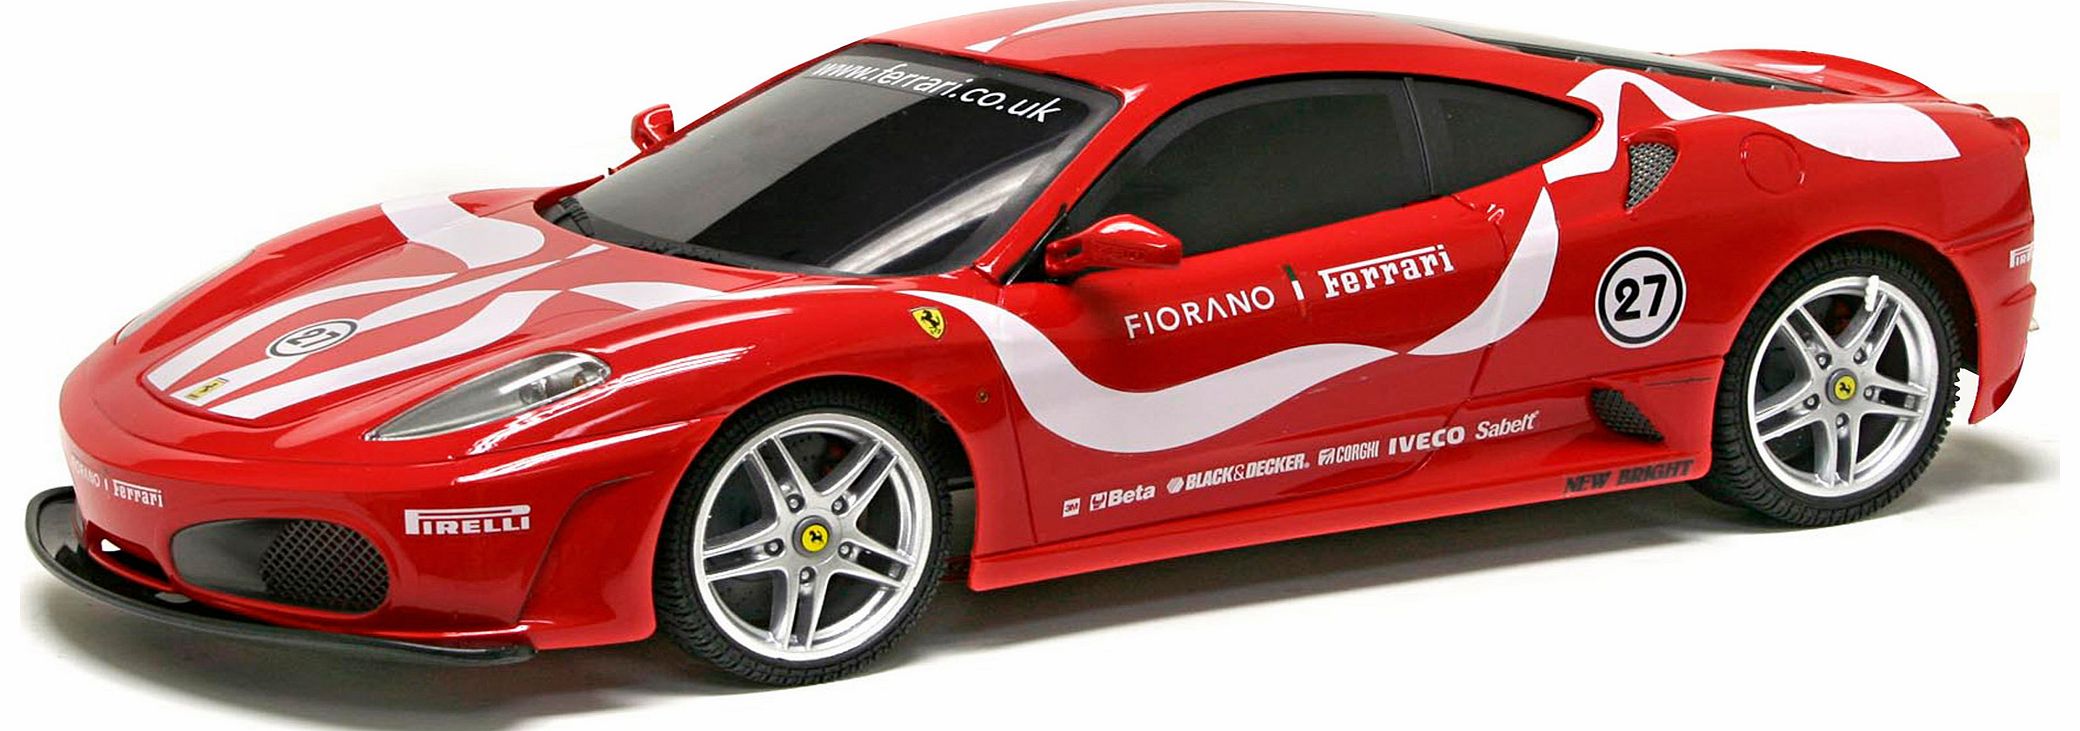 New Bright 1:10 RC Full Function Fiorano Ferrari